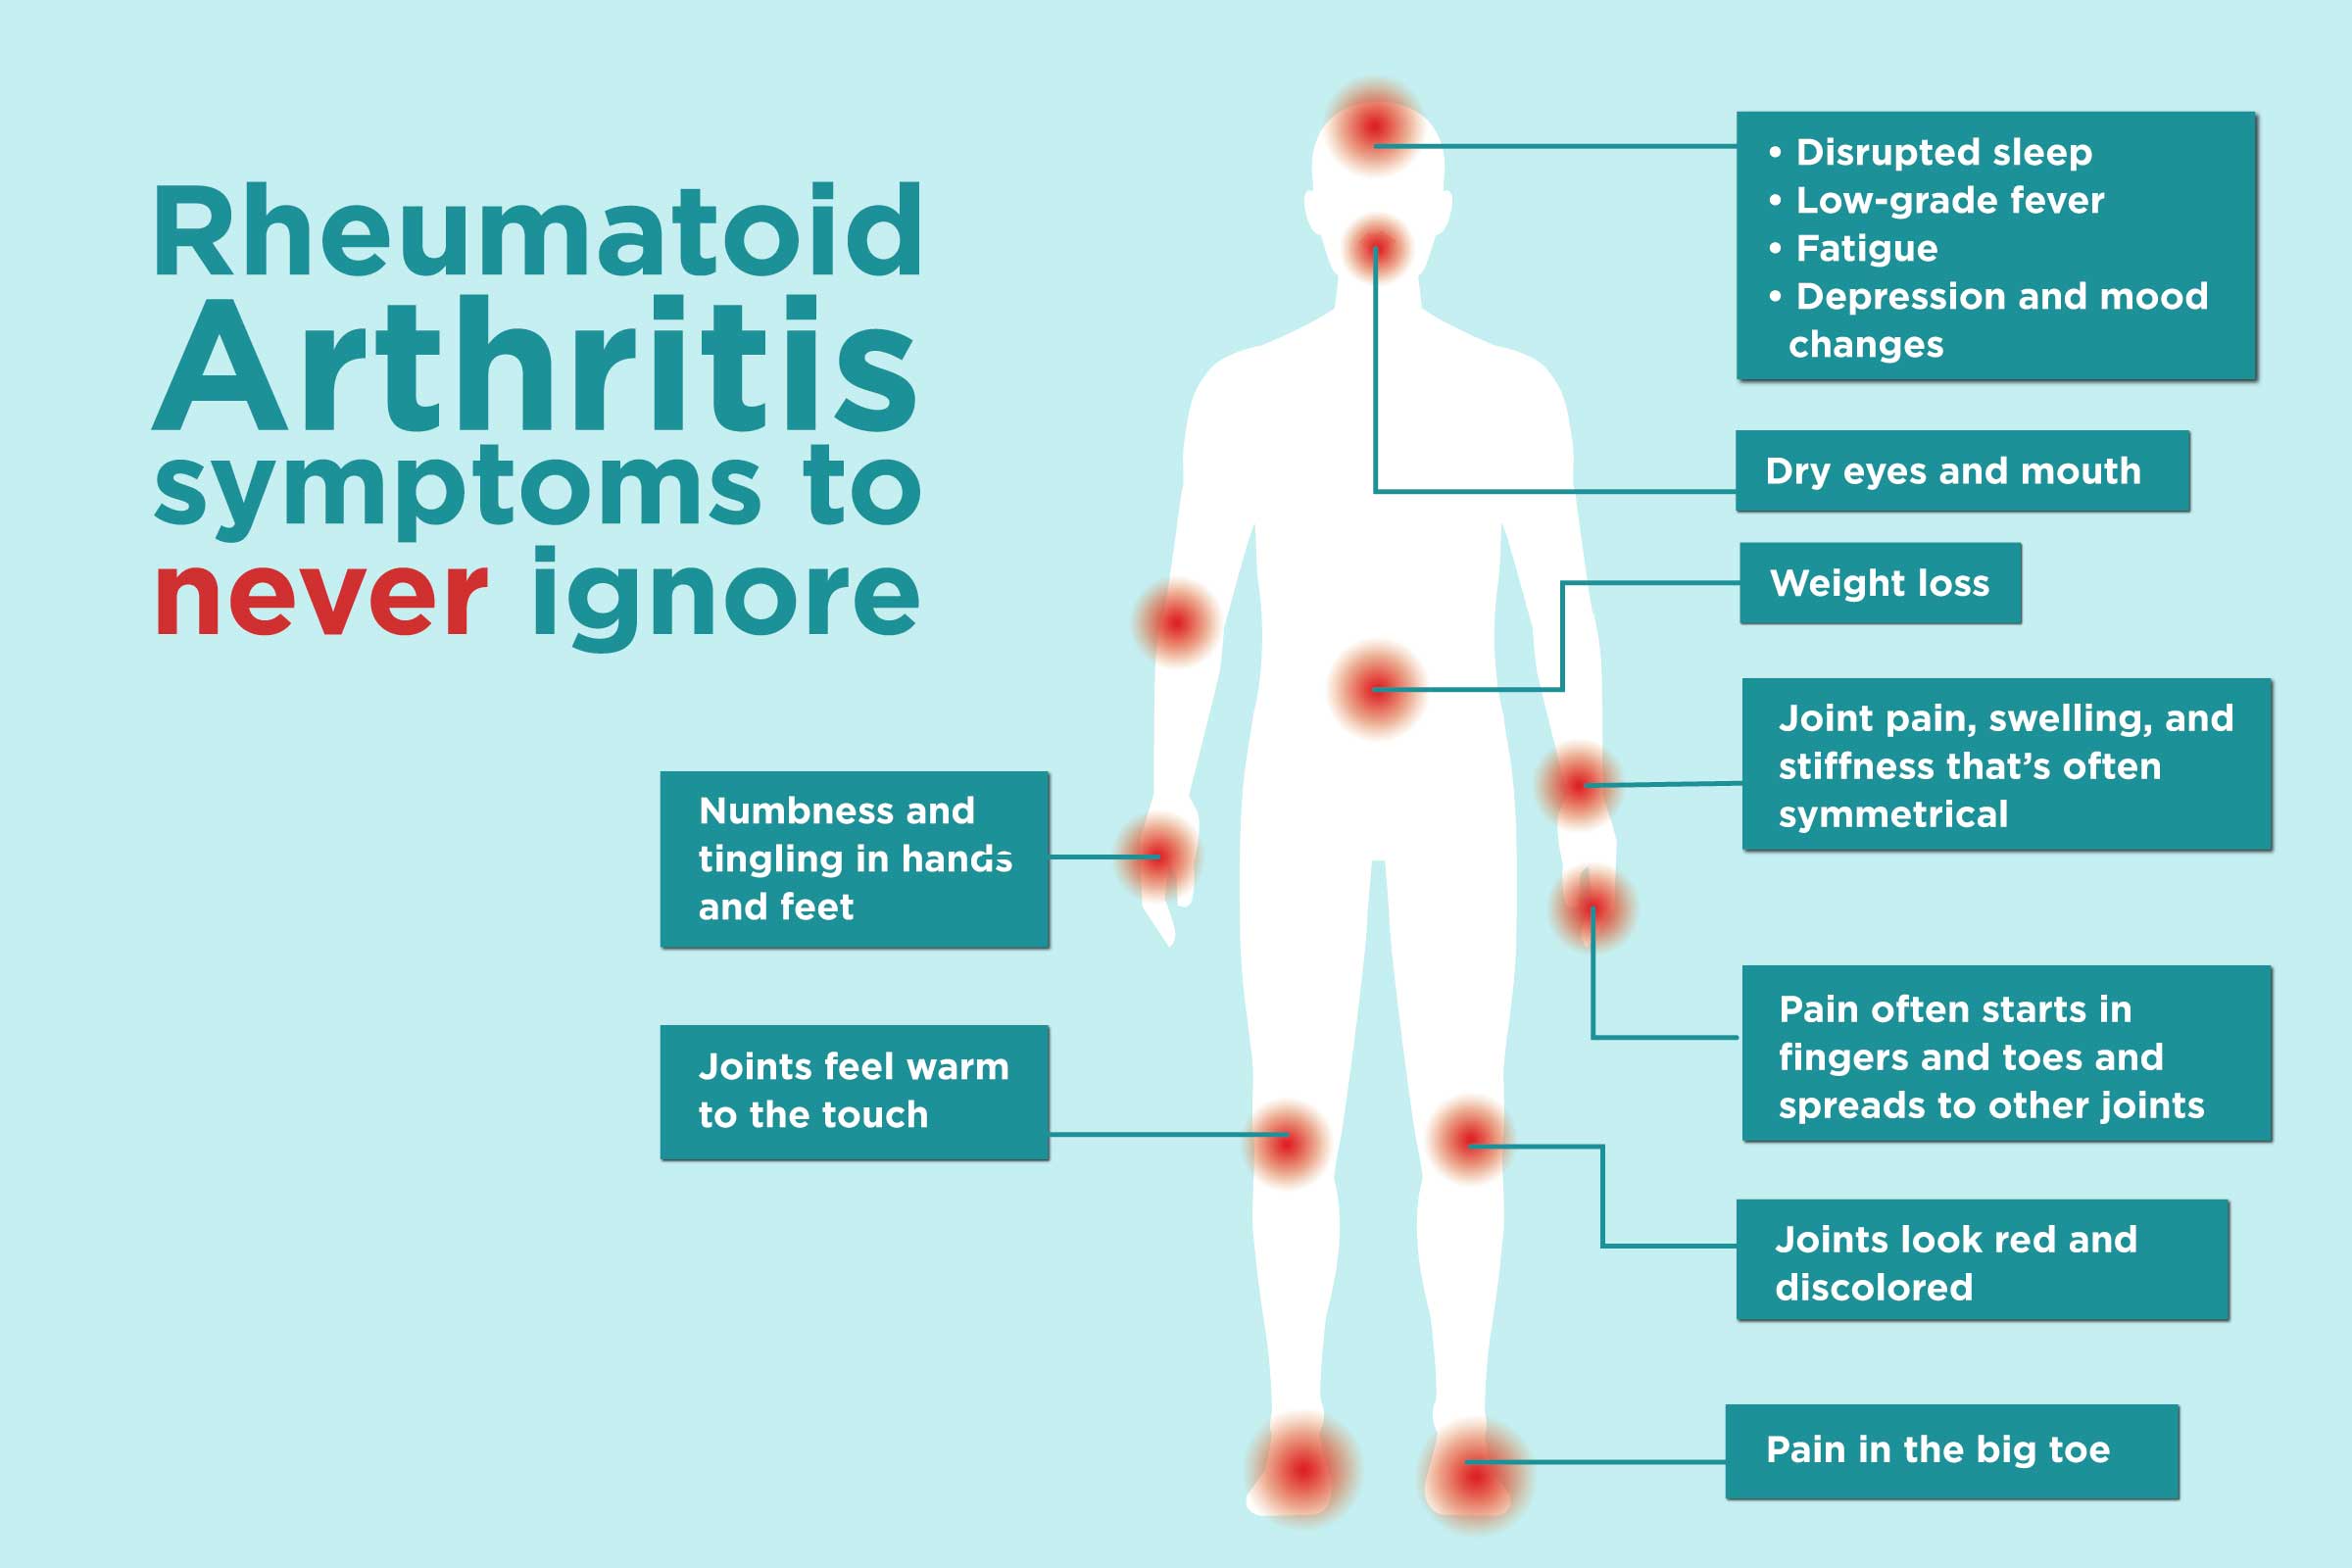 Economic burden of long-term care of rheumatoid arthritis patients in Hungary